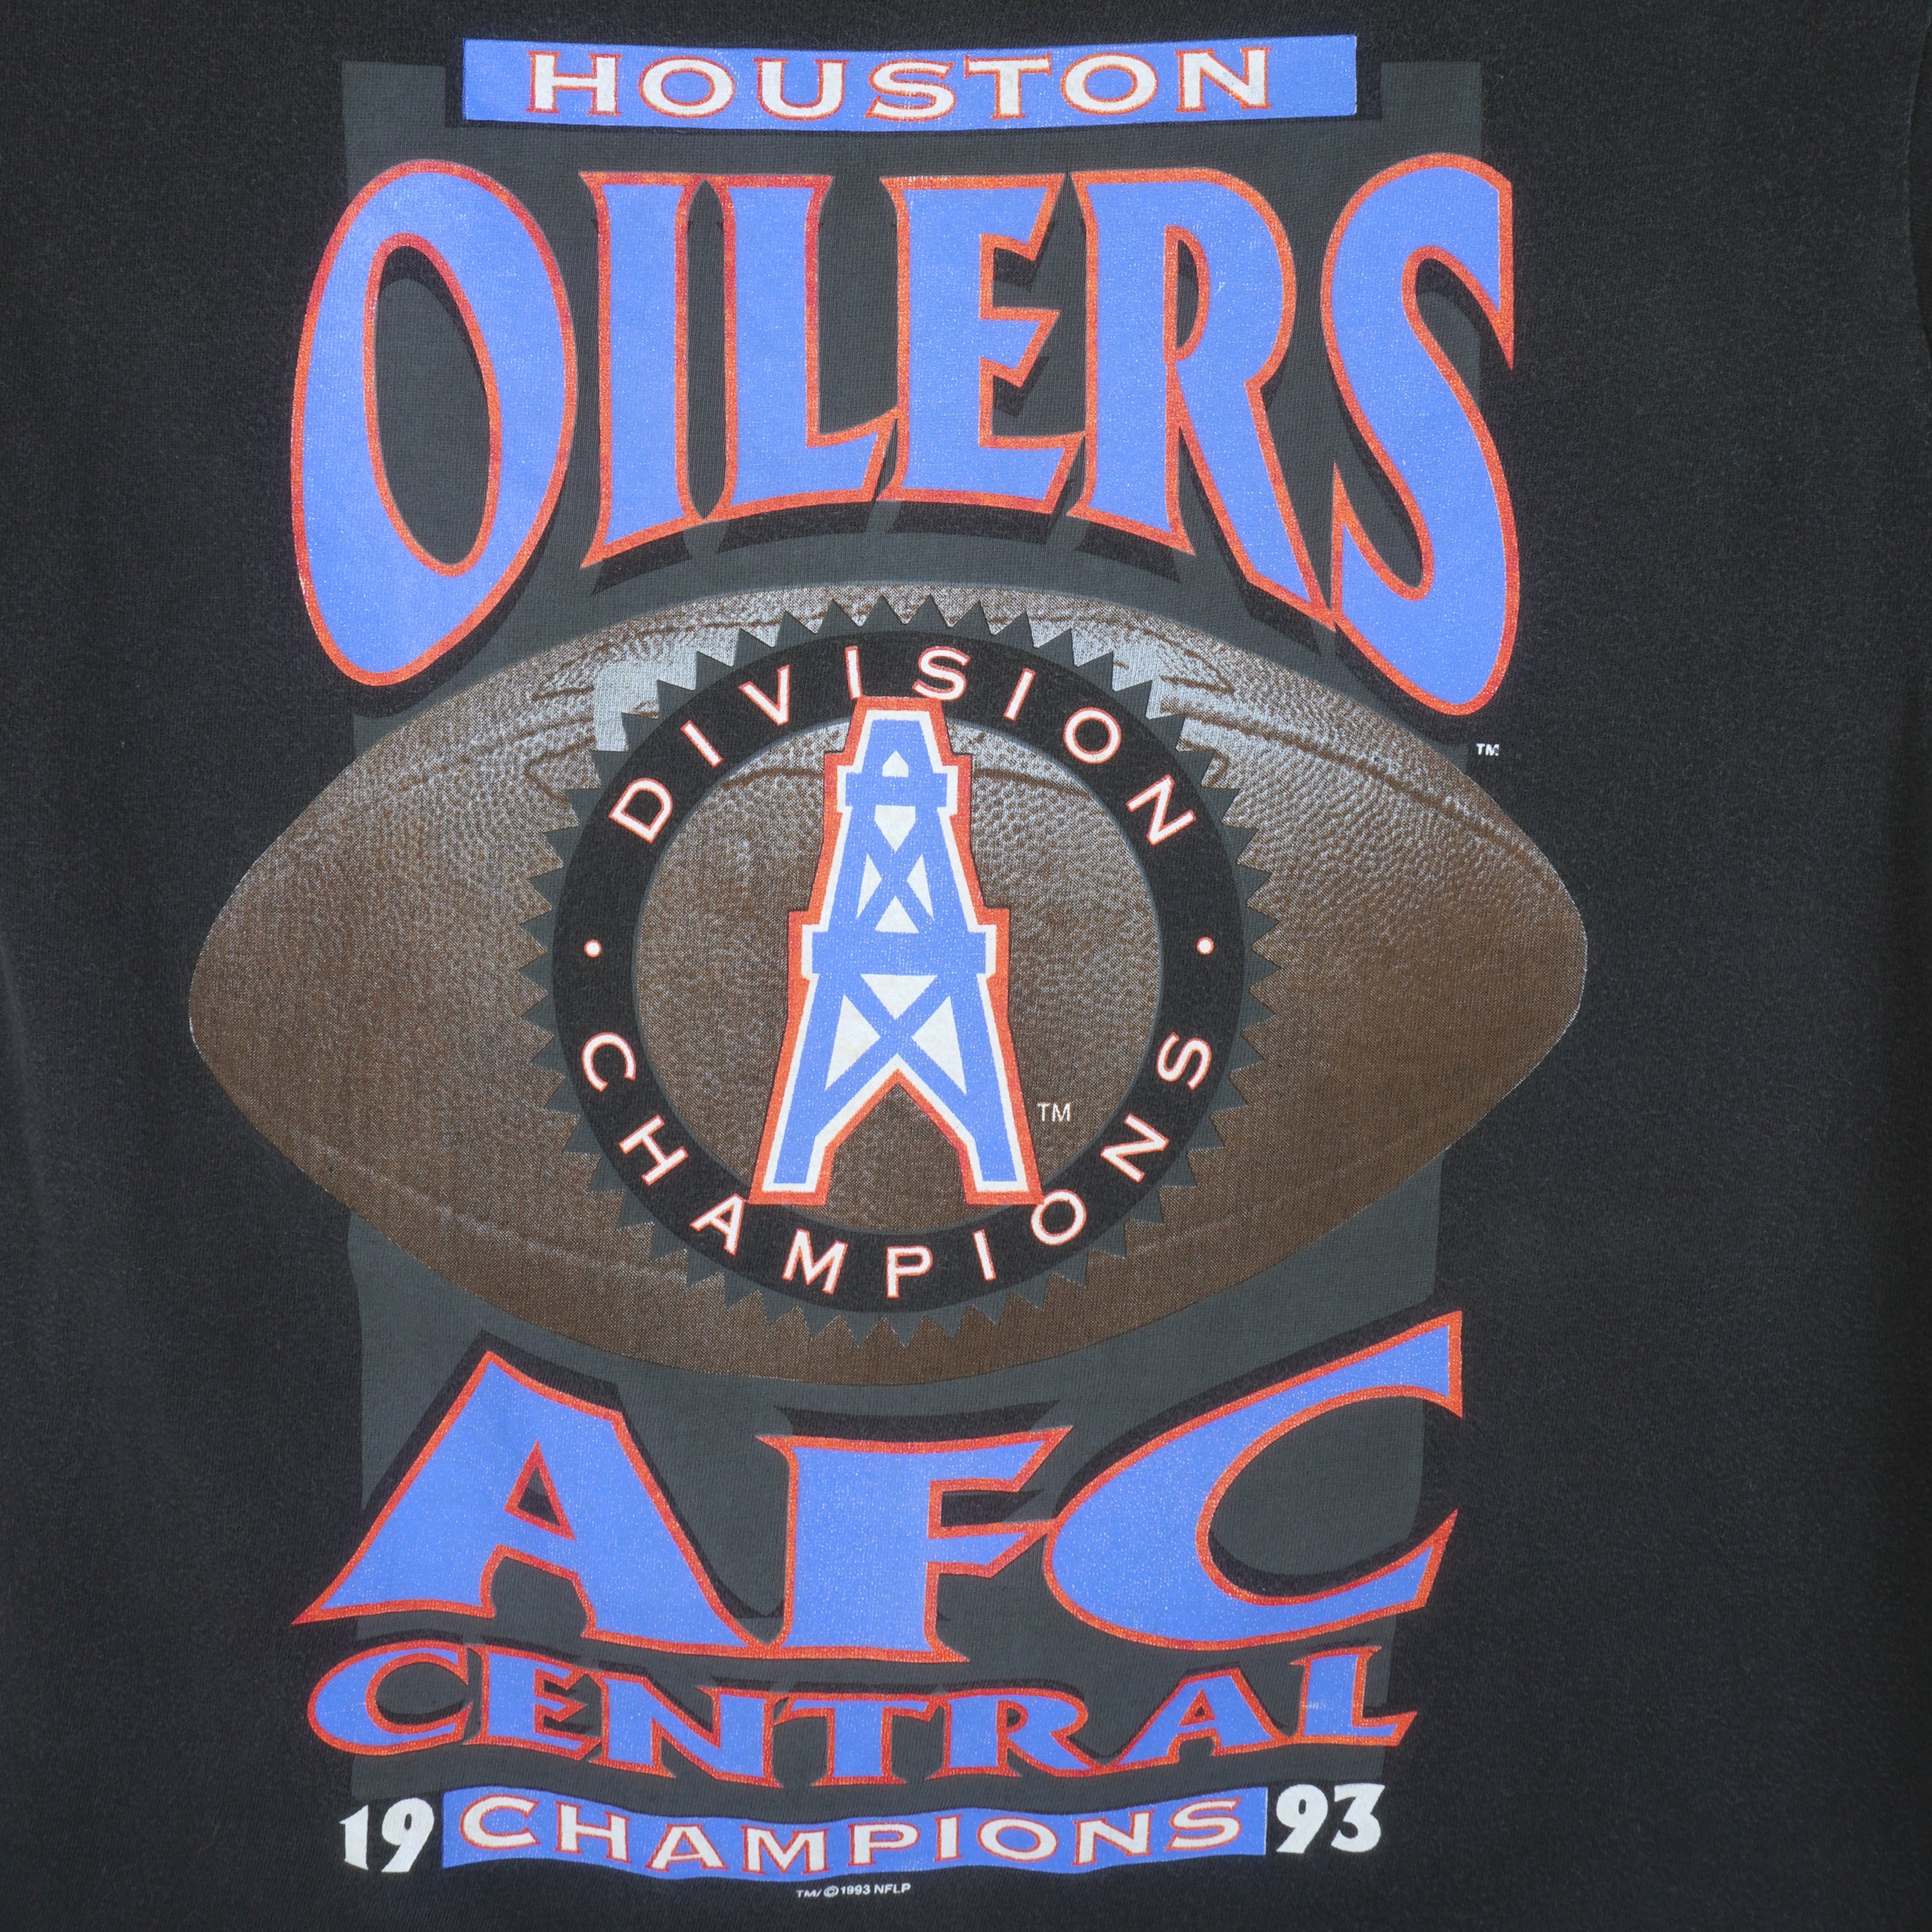 Houston Oilers Merchandise, Oilers Apparel, Gear